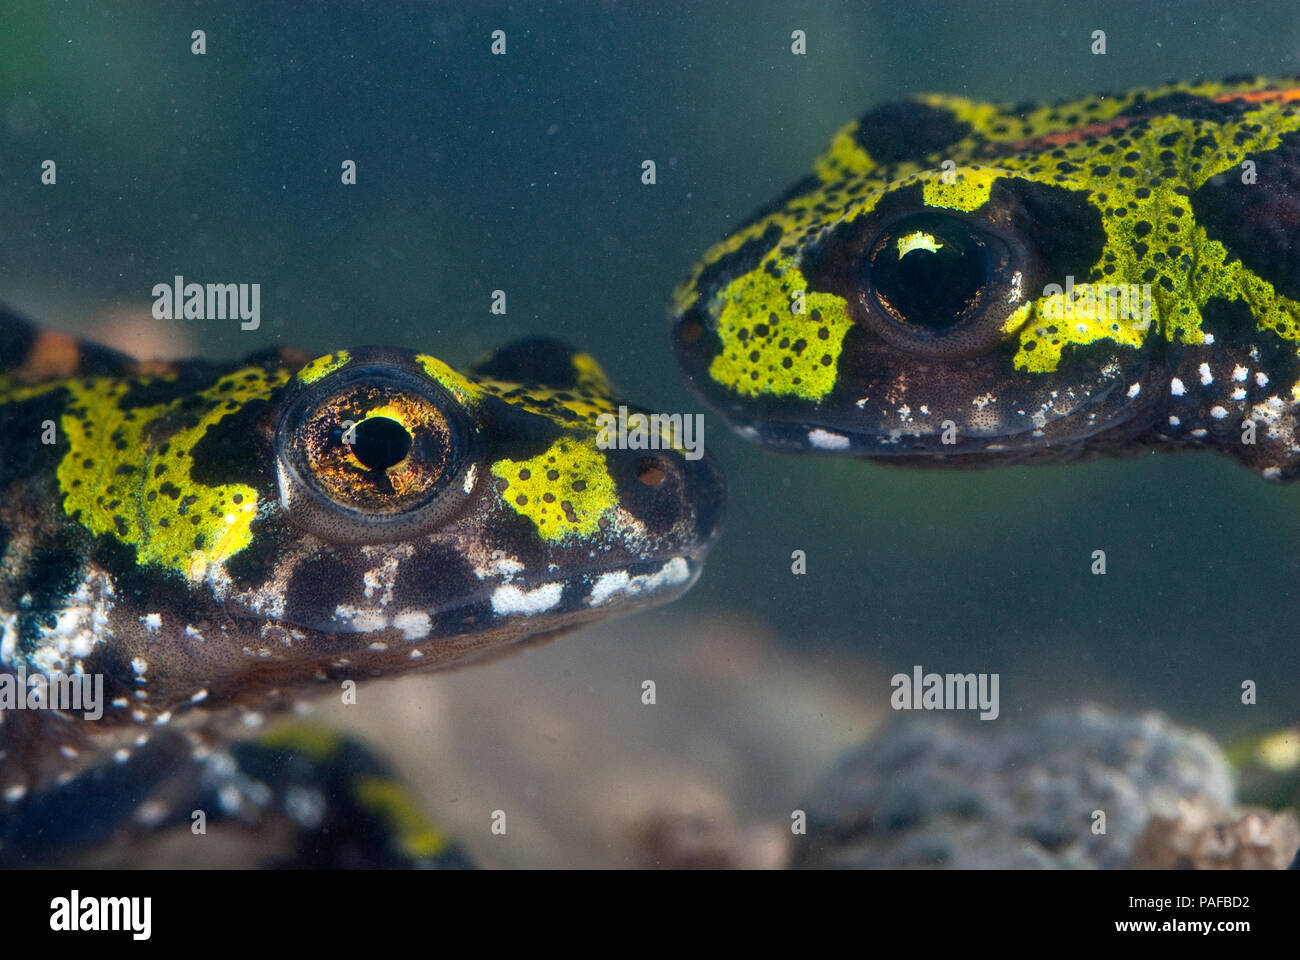 Marbled newt, Triturus marmoratus in the water, crest, amphibian Stock Photo